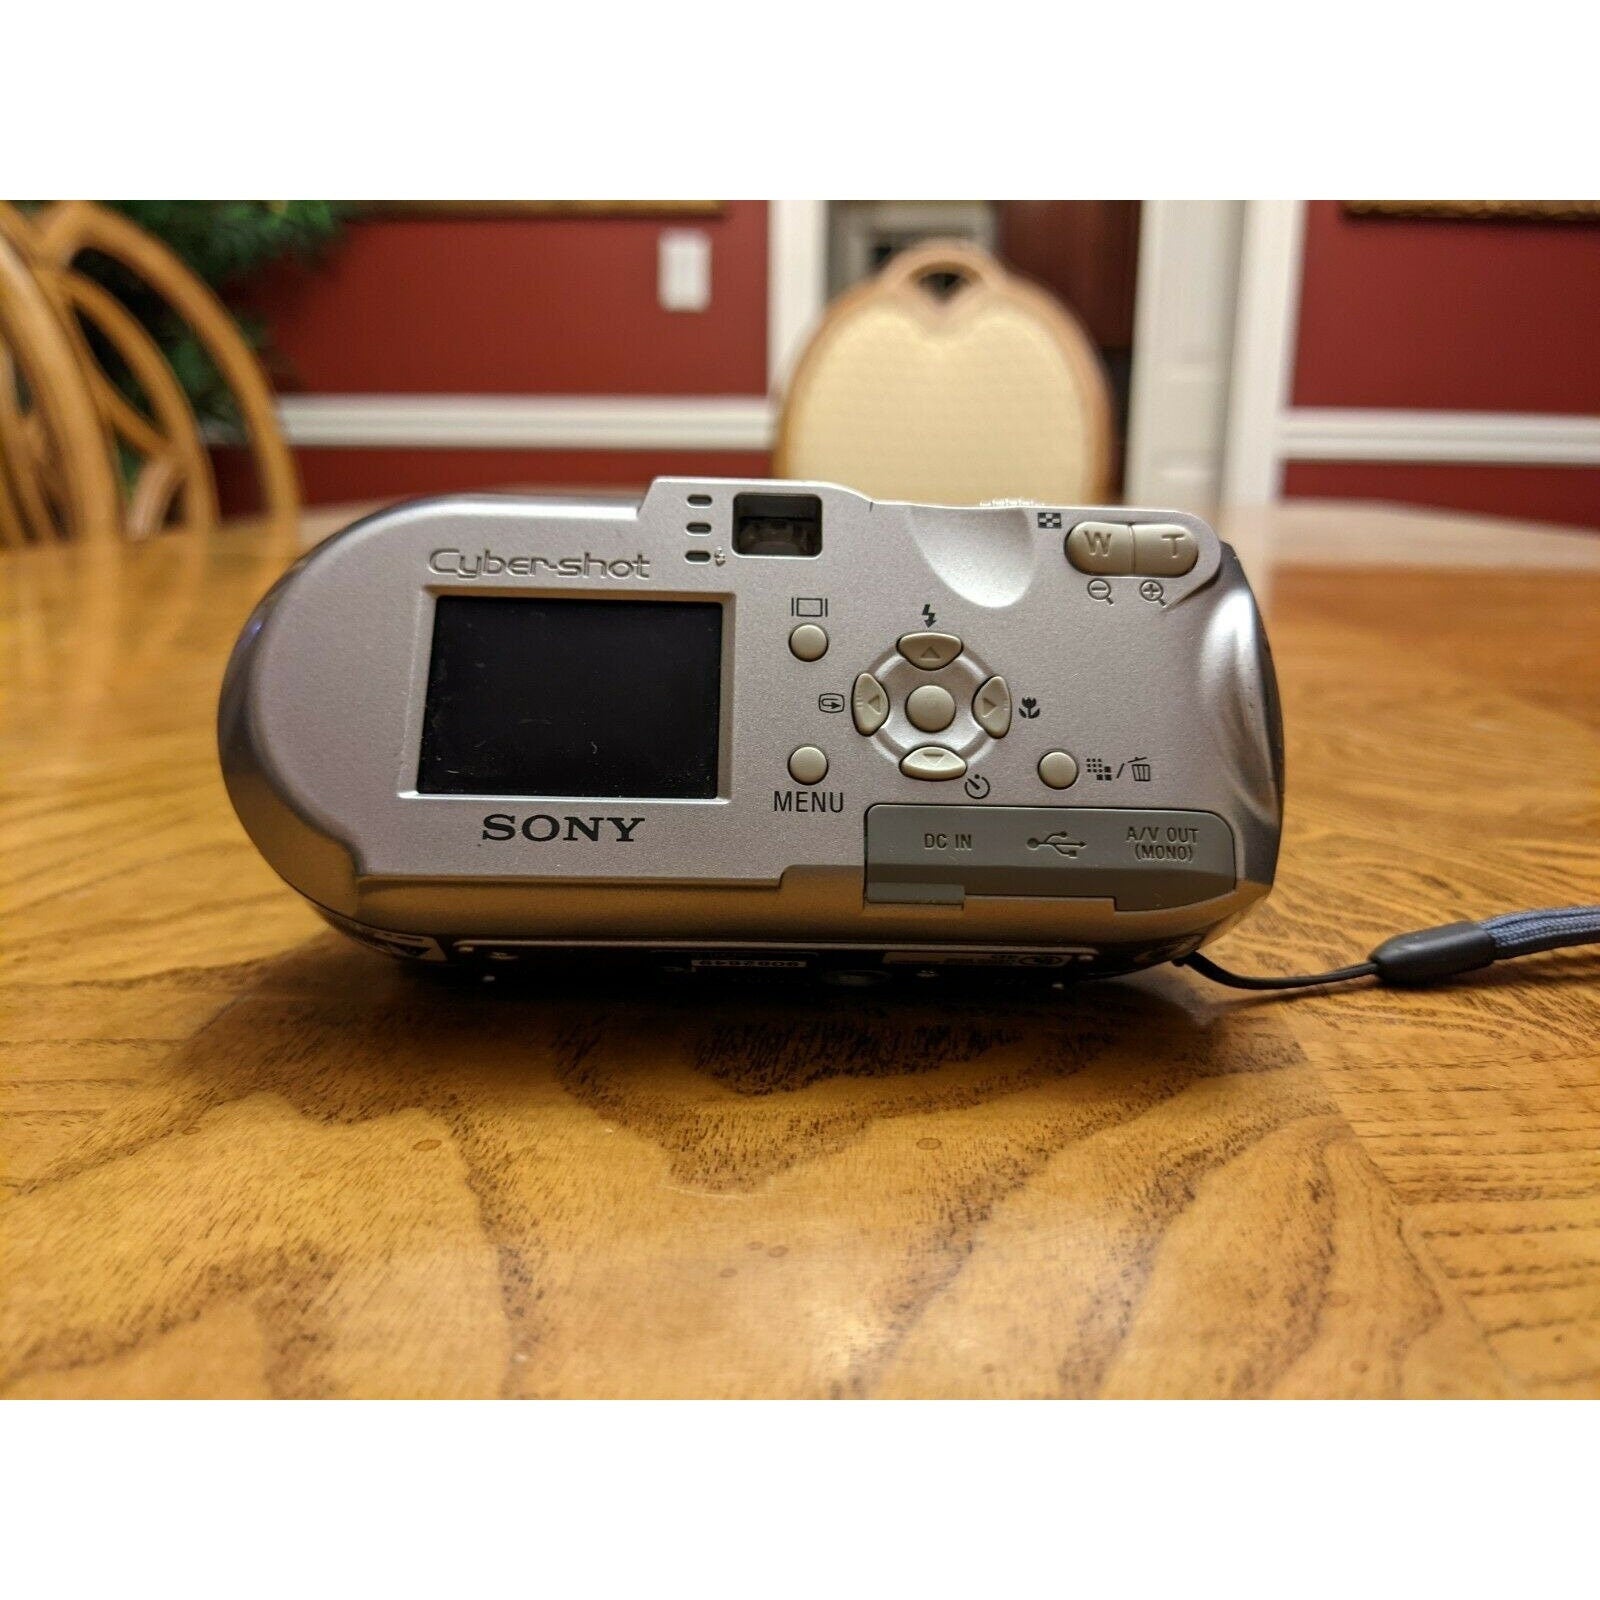 Sony Cybershot DSC-P93A 5MP Digital Camera with 3x Optical Zoom